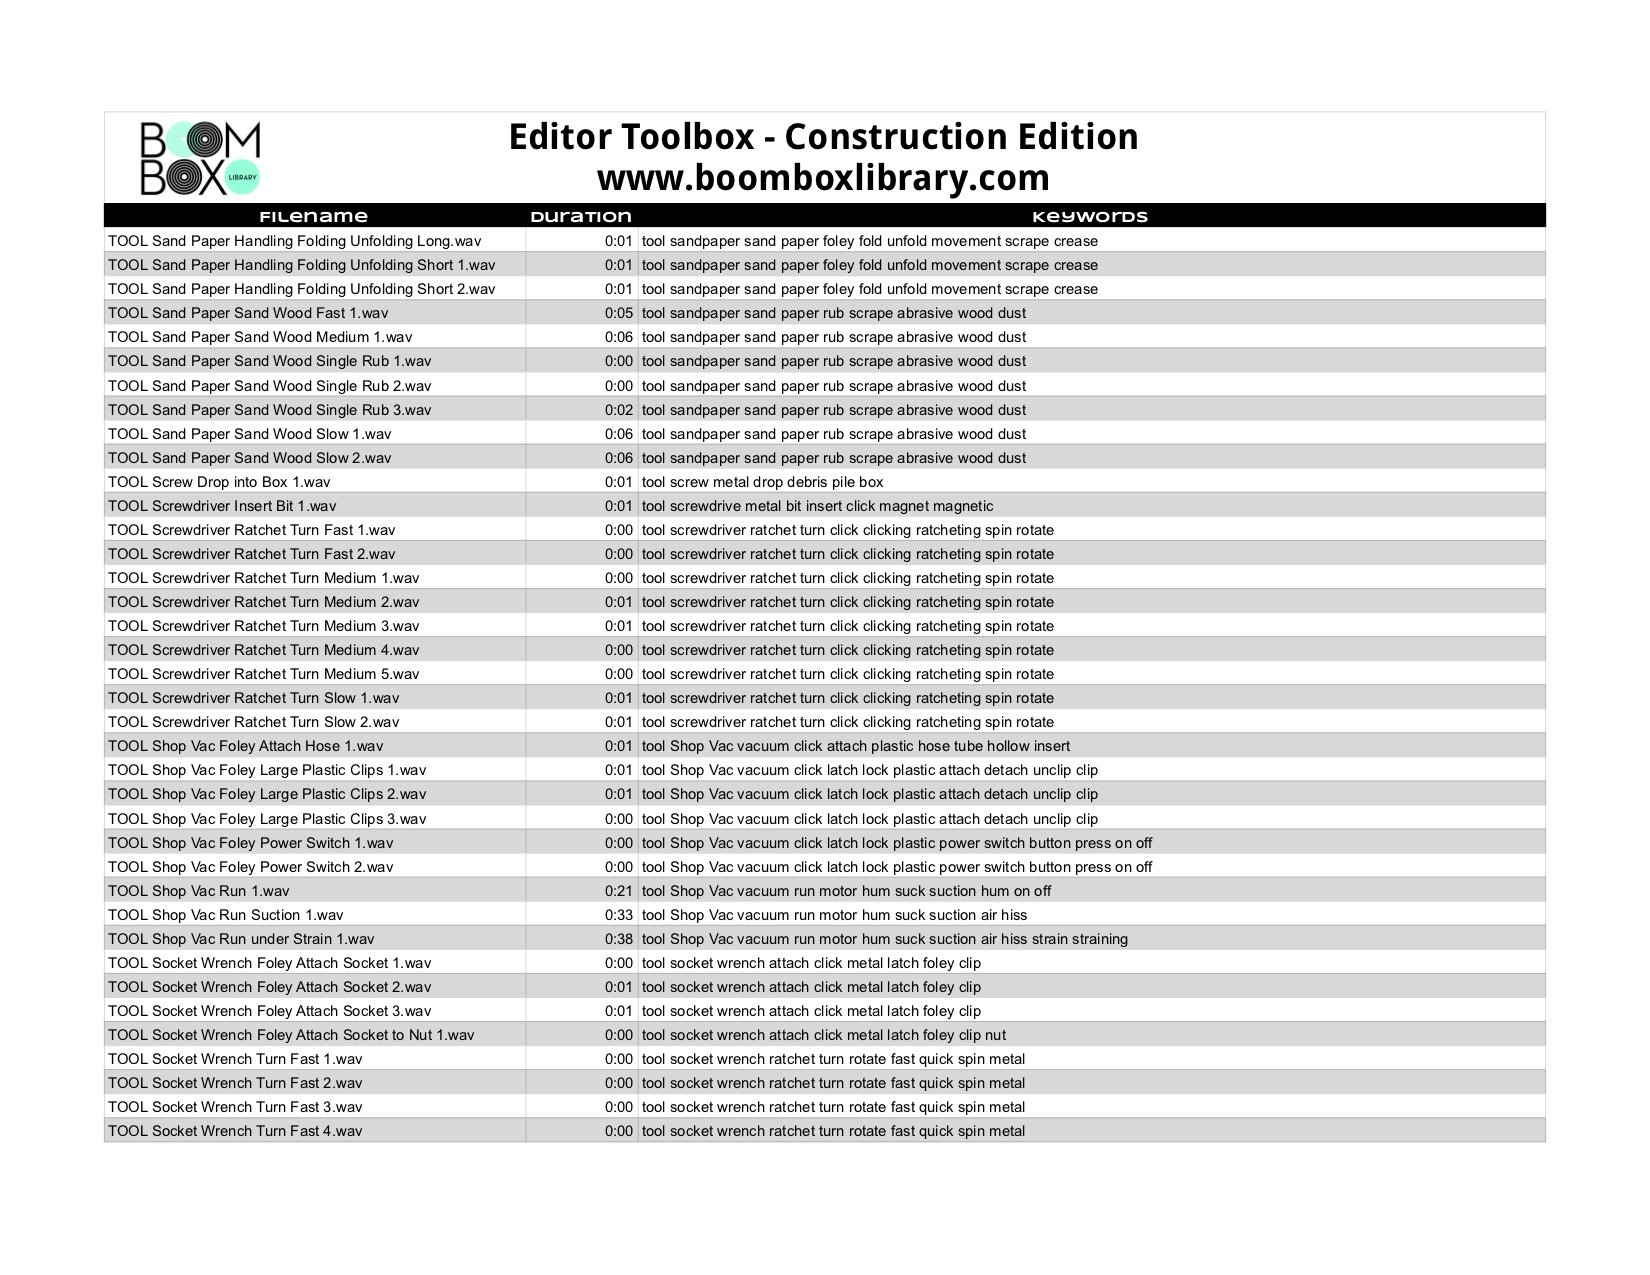 Boom Box Library - Editor Toolbox - Construction Edition - Metadata JPG PG 4.jpg